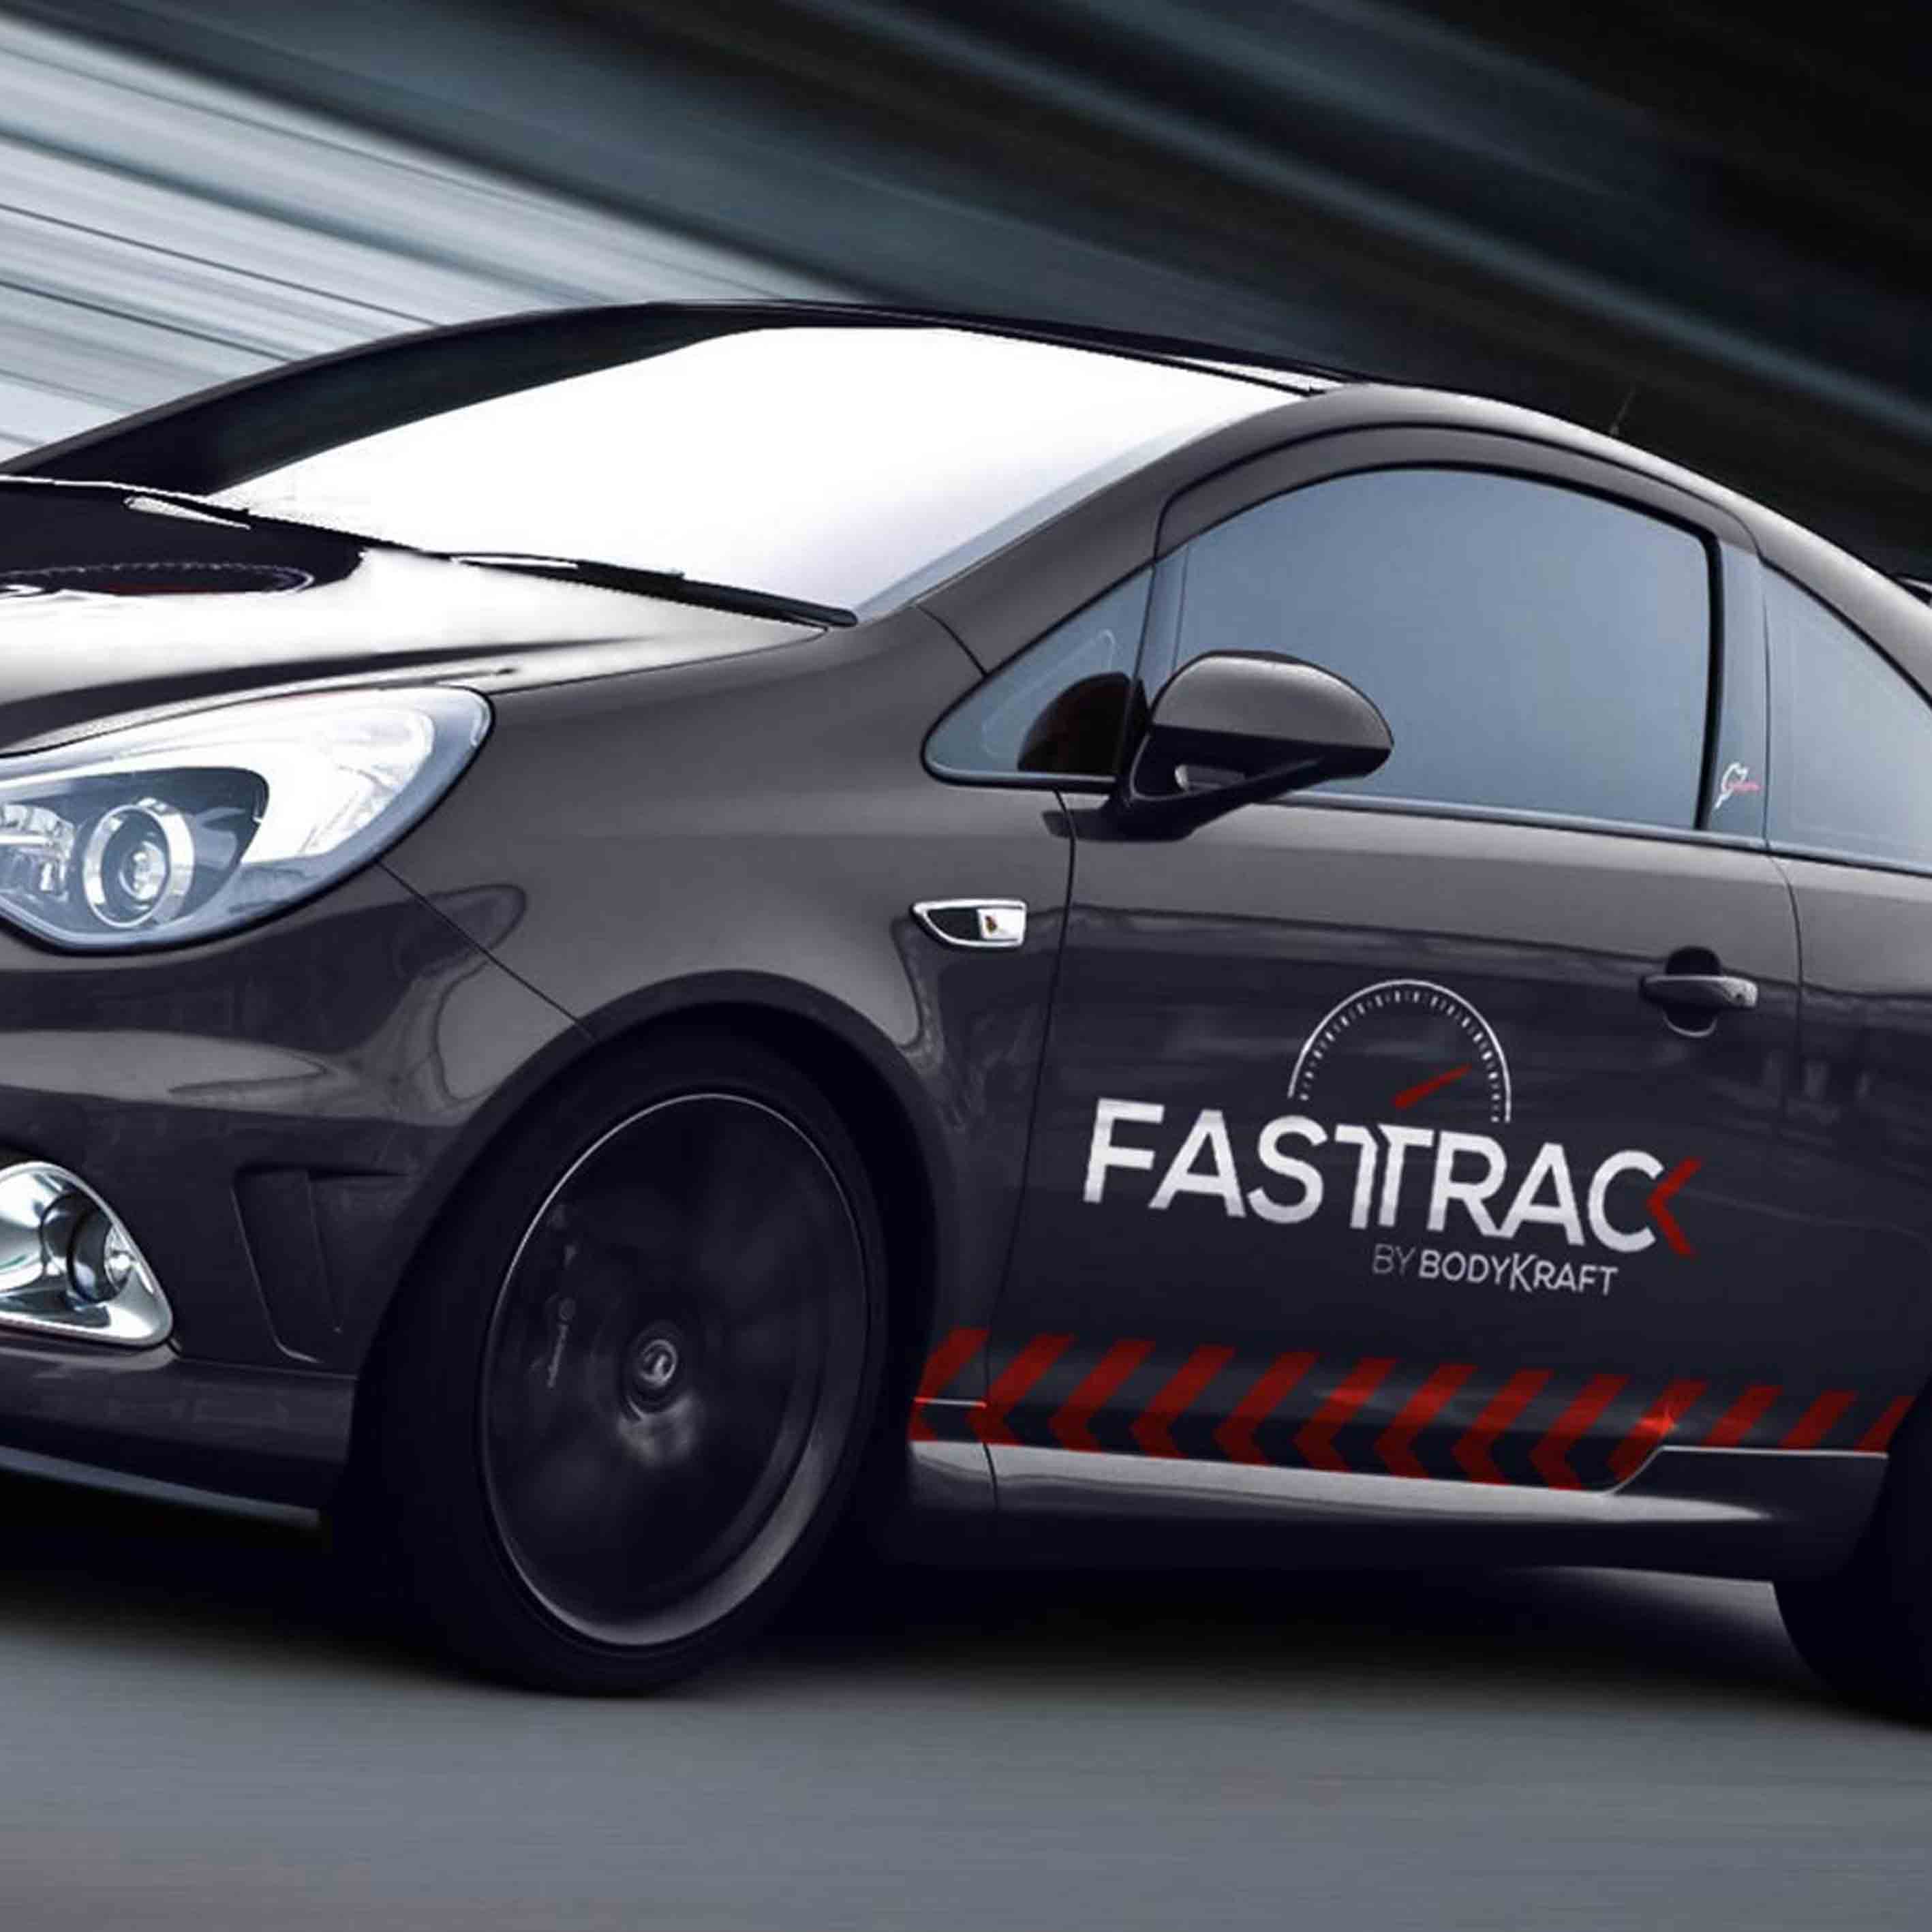 Fastrack car image